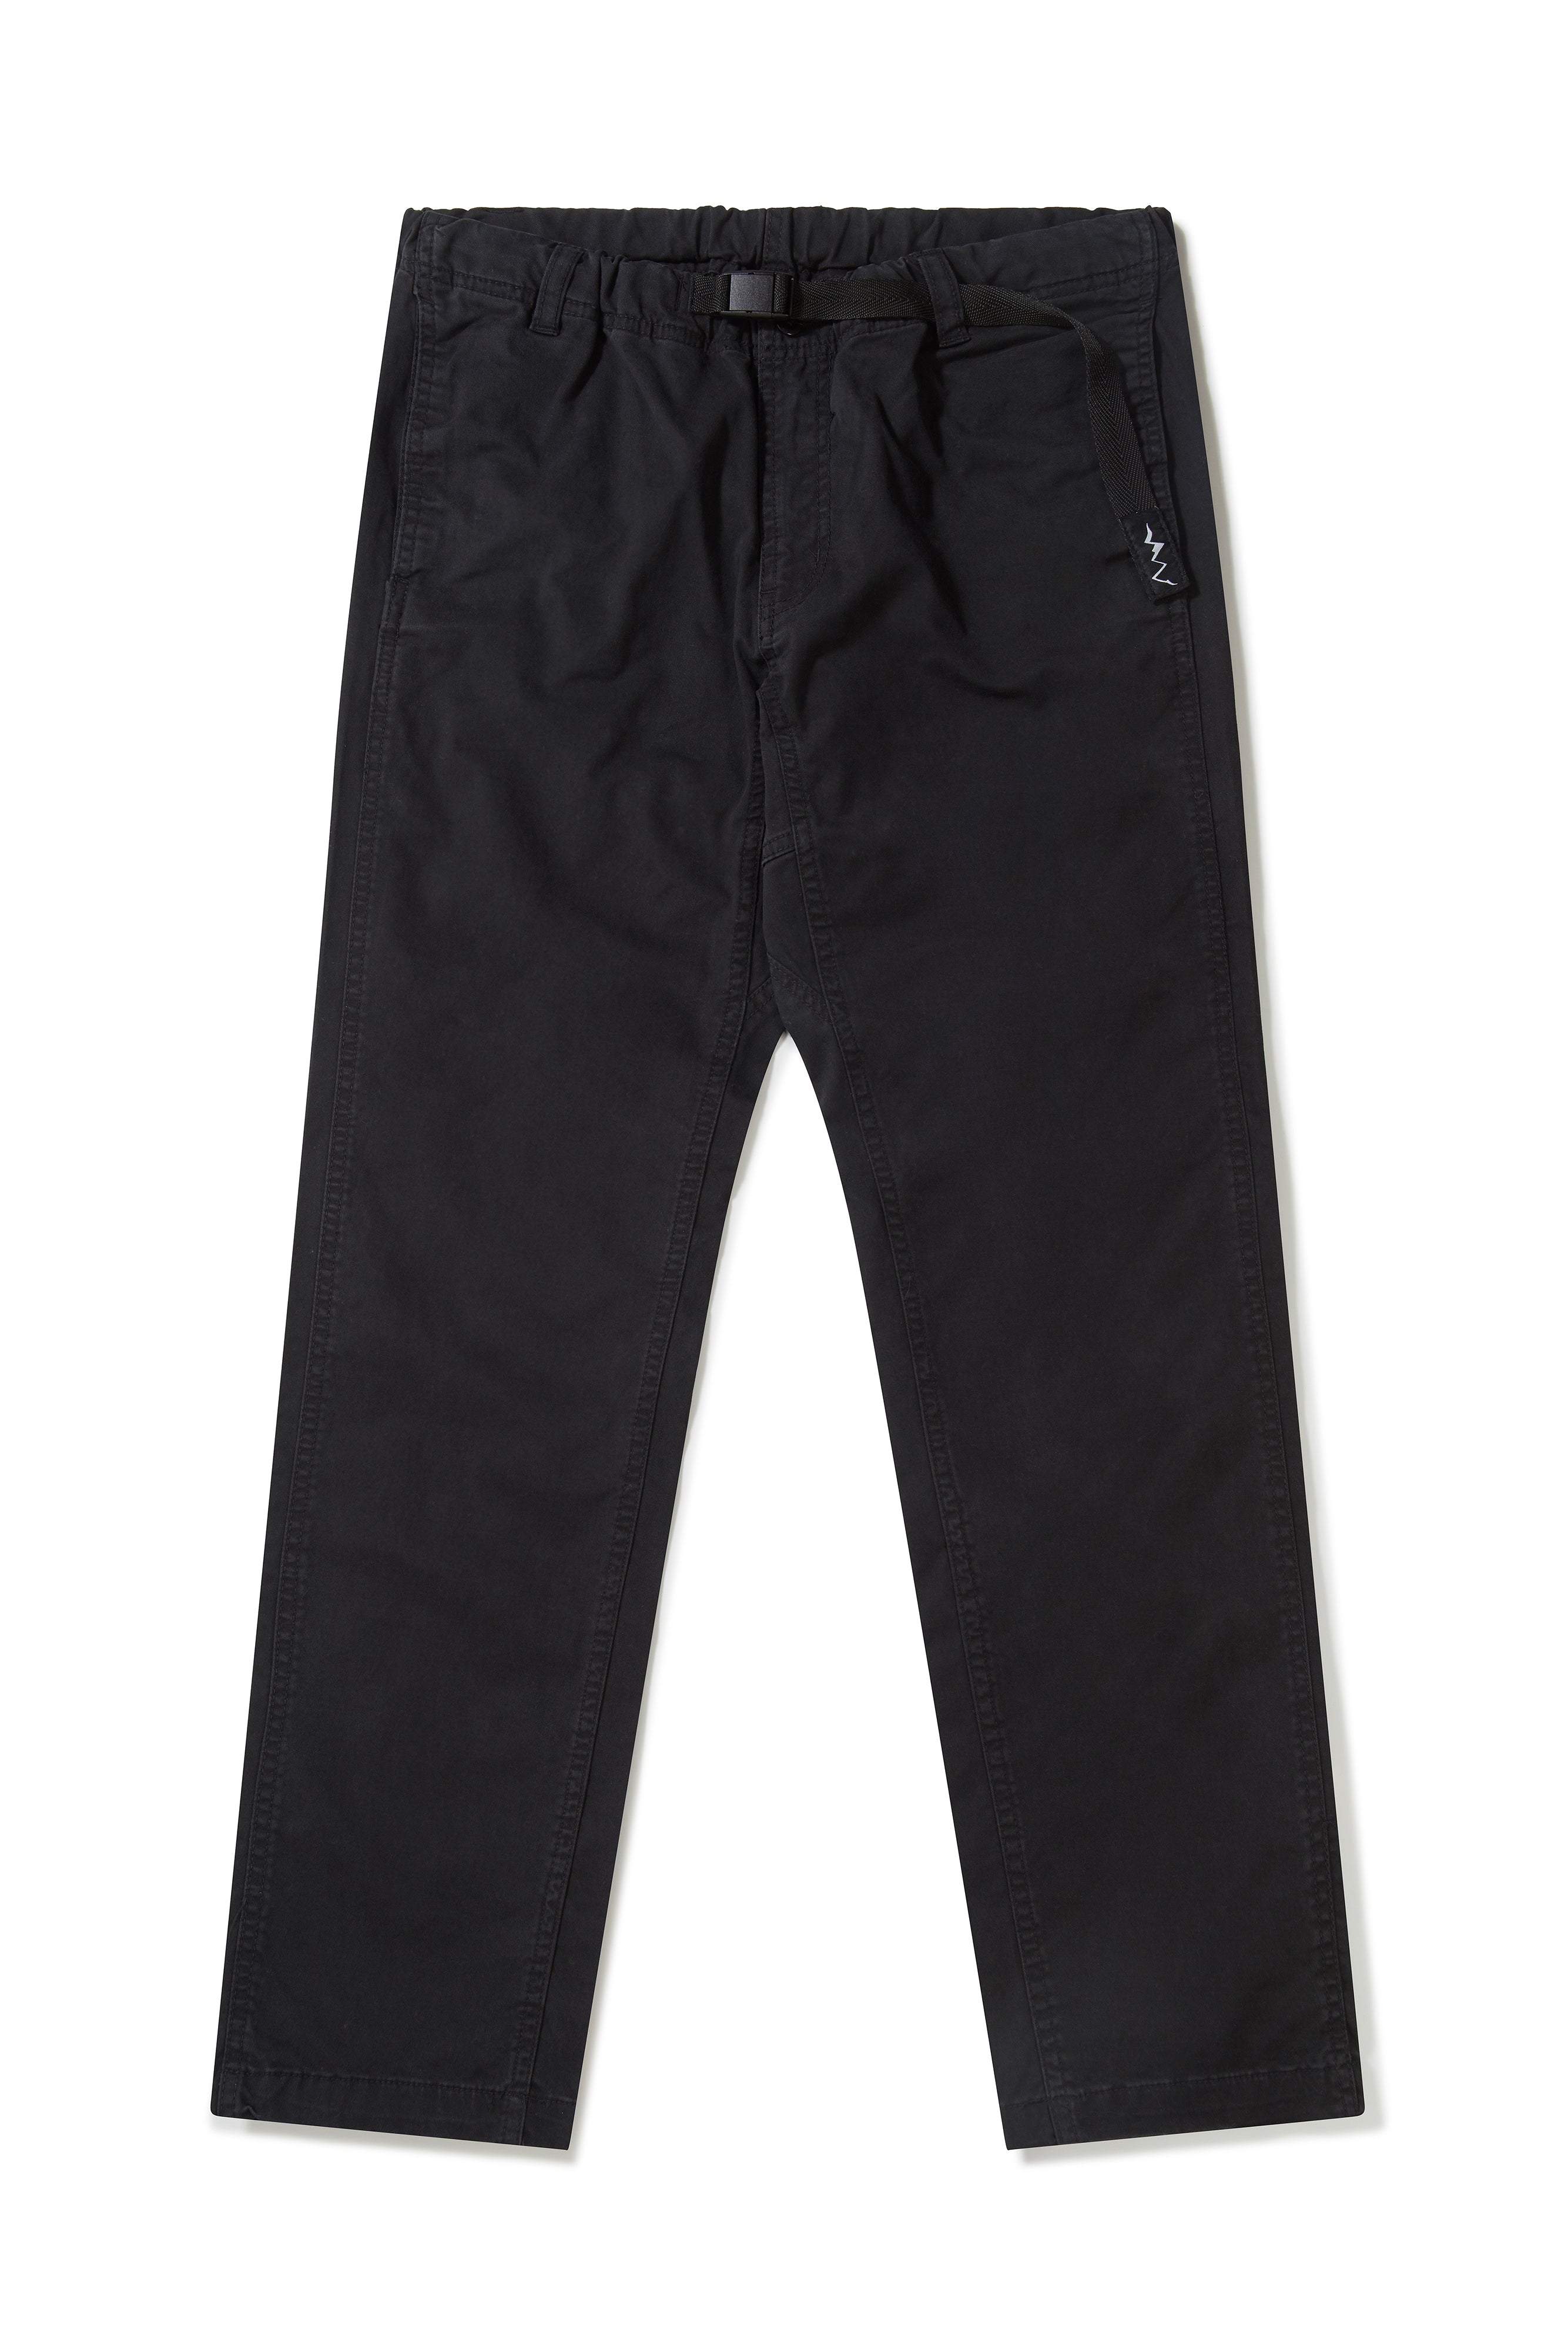 Manastash Flex Climber Pants (Black) – Manastash Europe